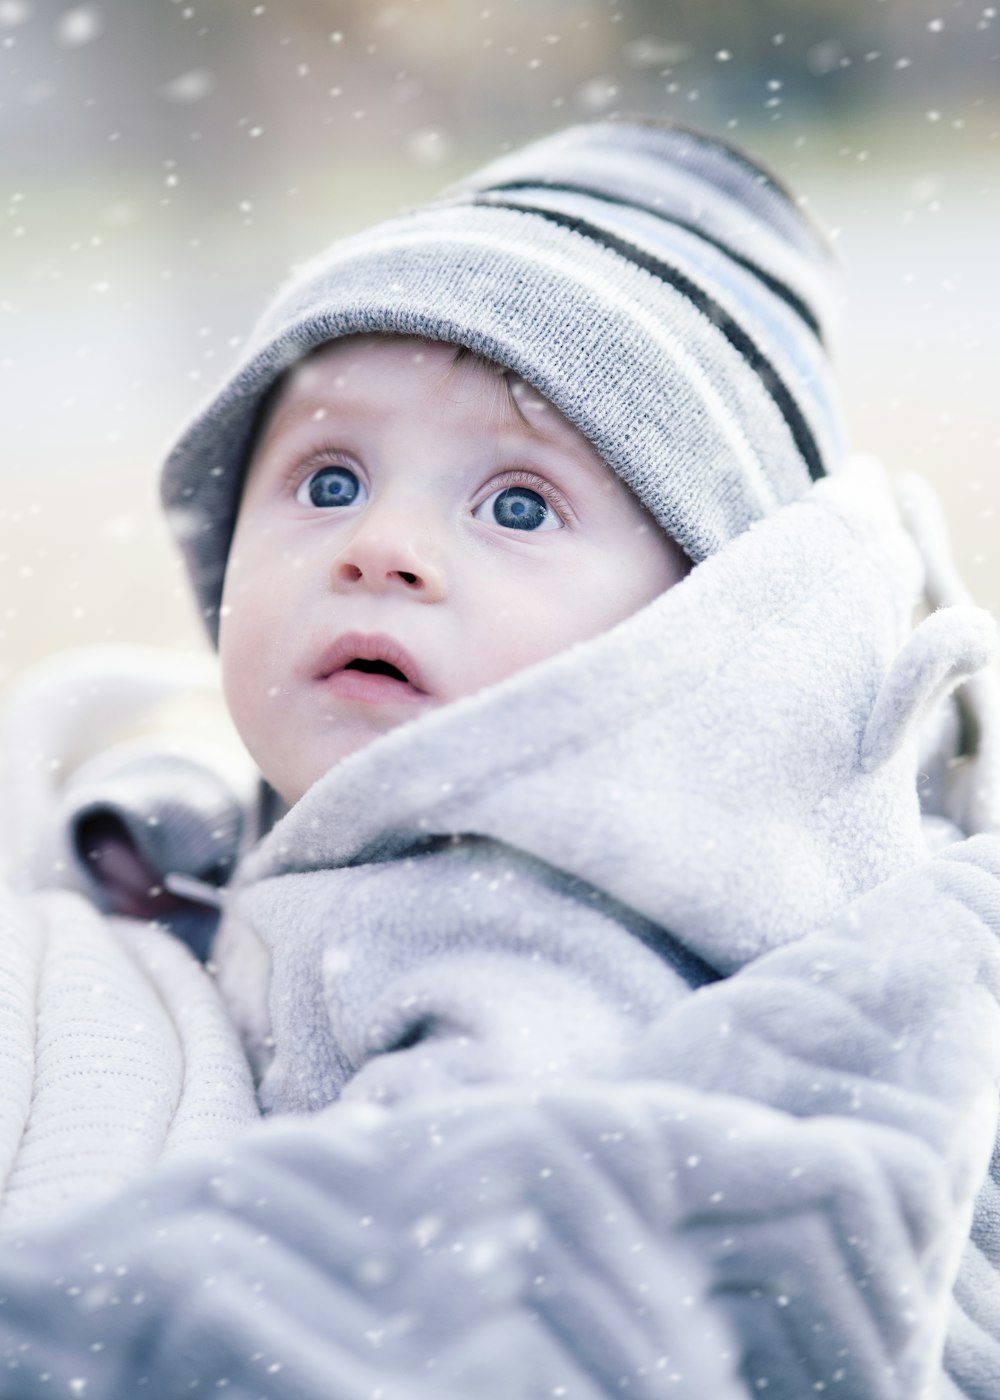 convergentie Corporation Figuur Baby Winter Pictures | Download Free Images on Unsplash